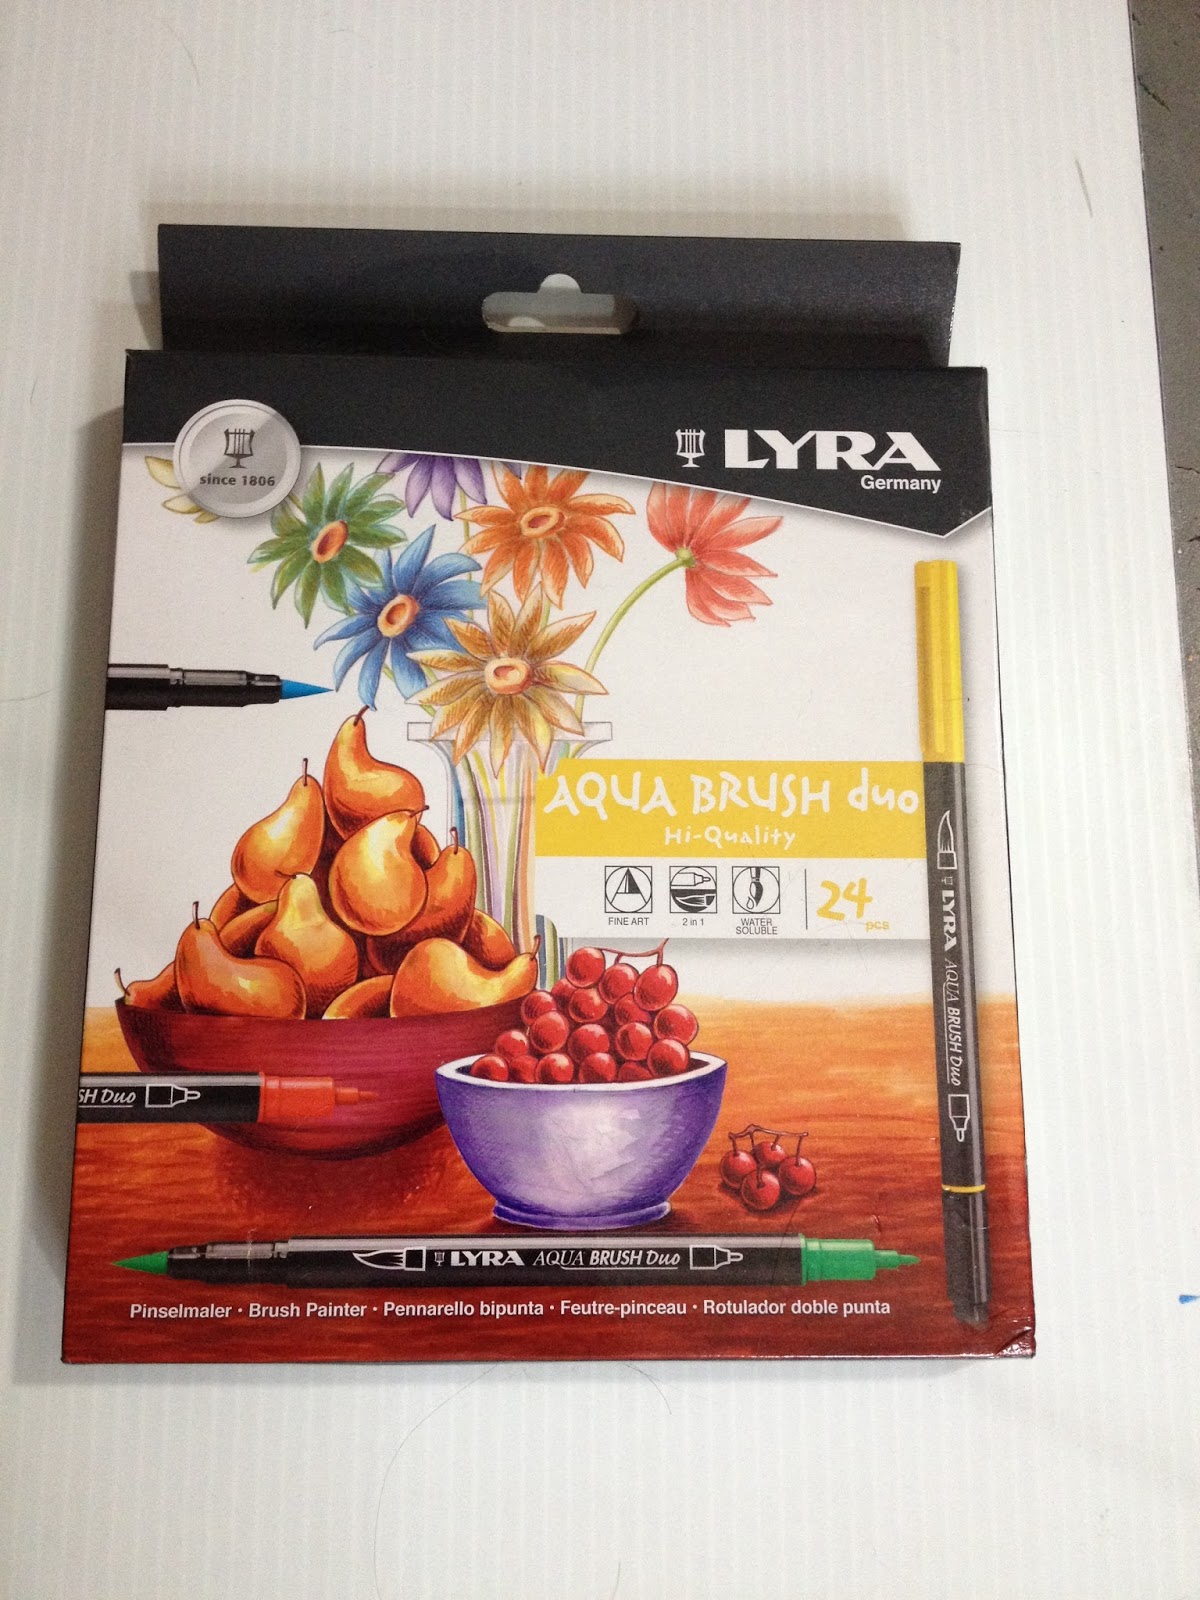 Lyra Aqua Brush Duo Markers - Assorted Colors, Set of 36